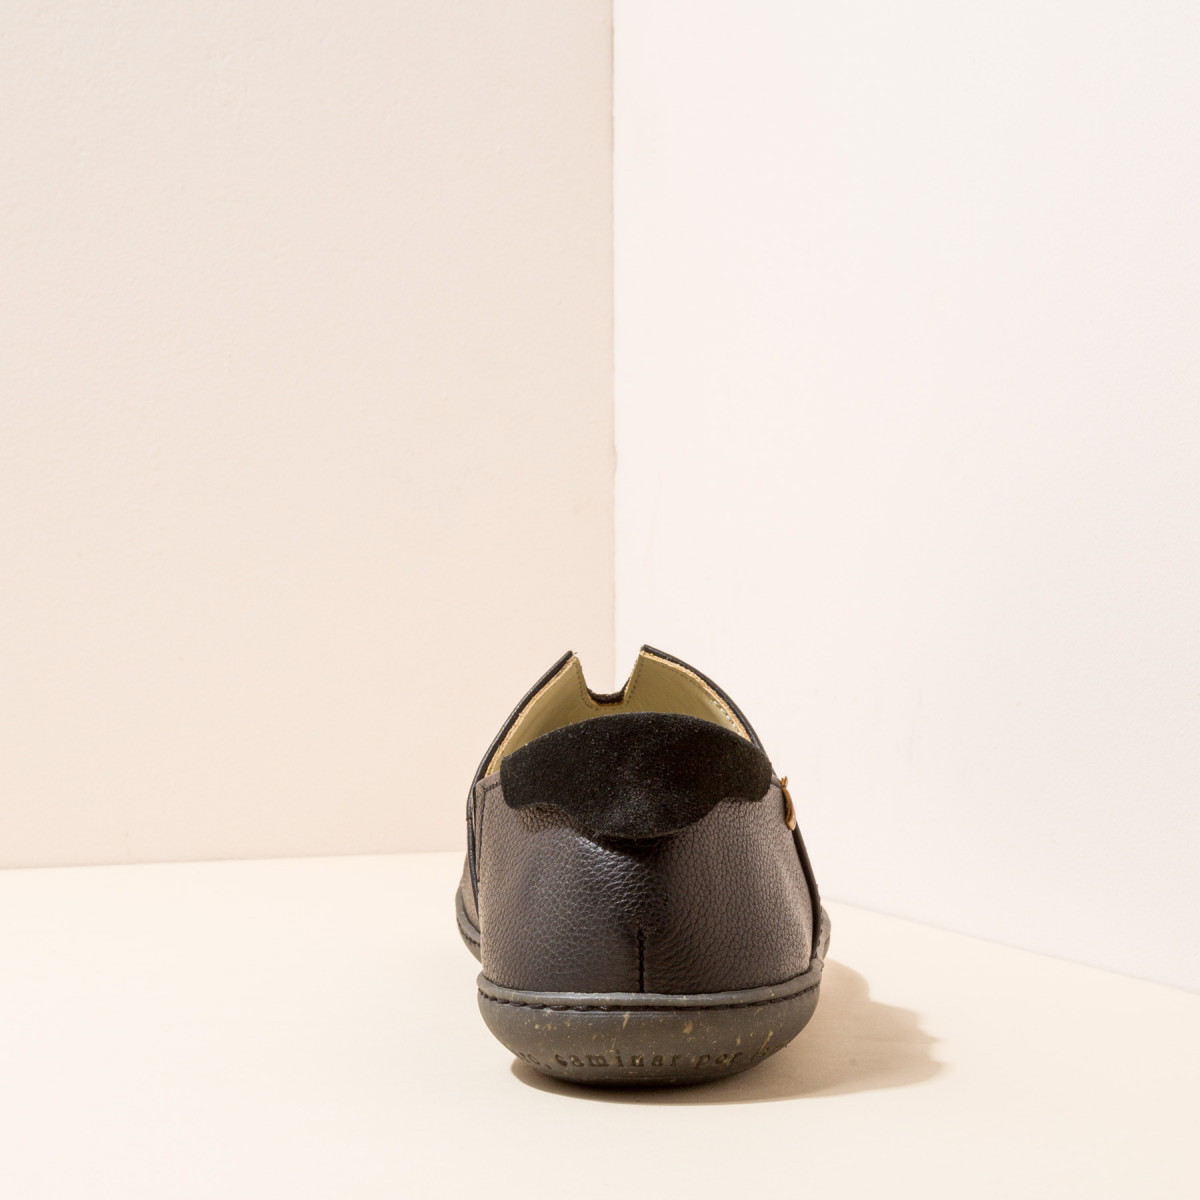 Chaussures plates en cuir naturel et semelles recyclées - Noir - El naturalista